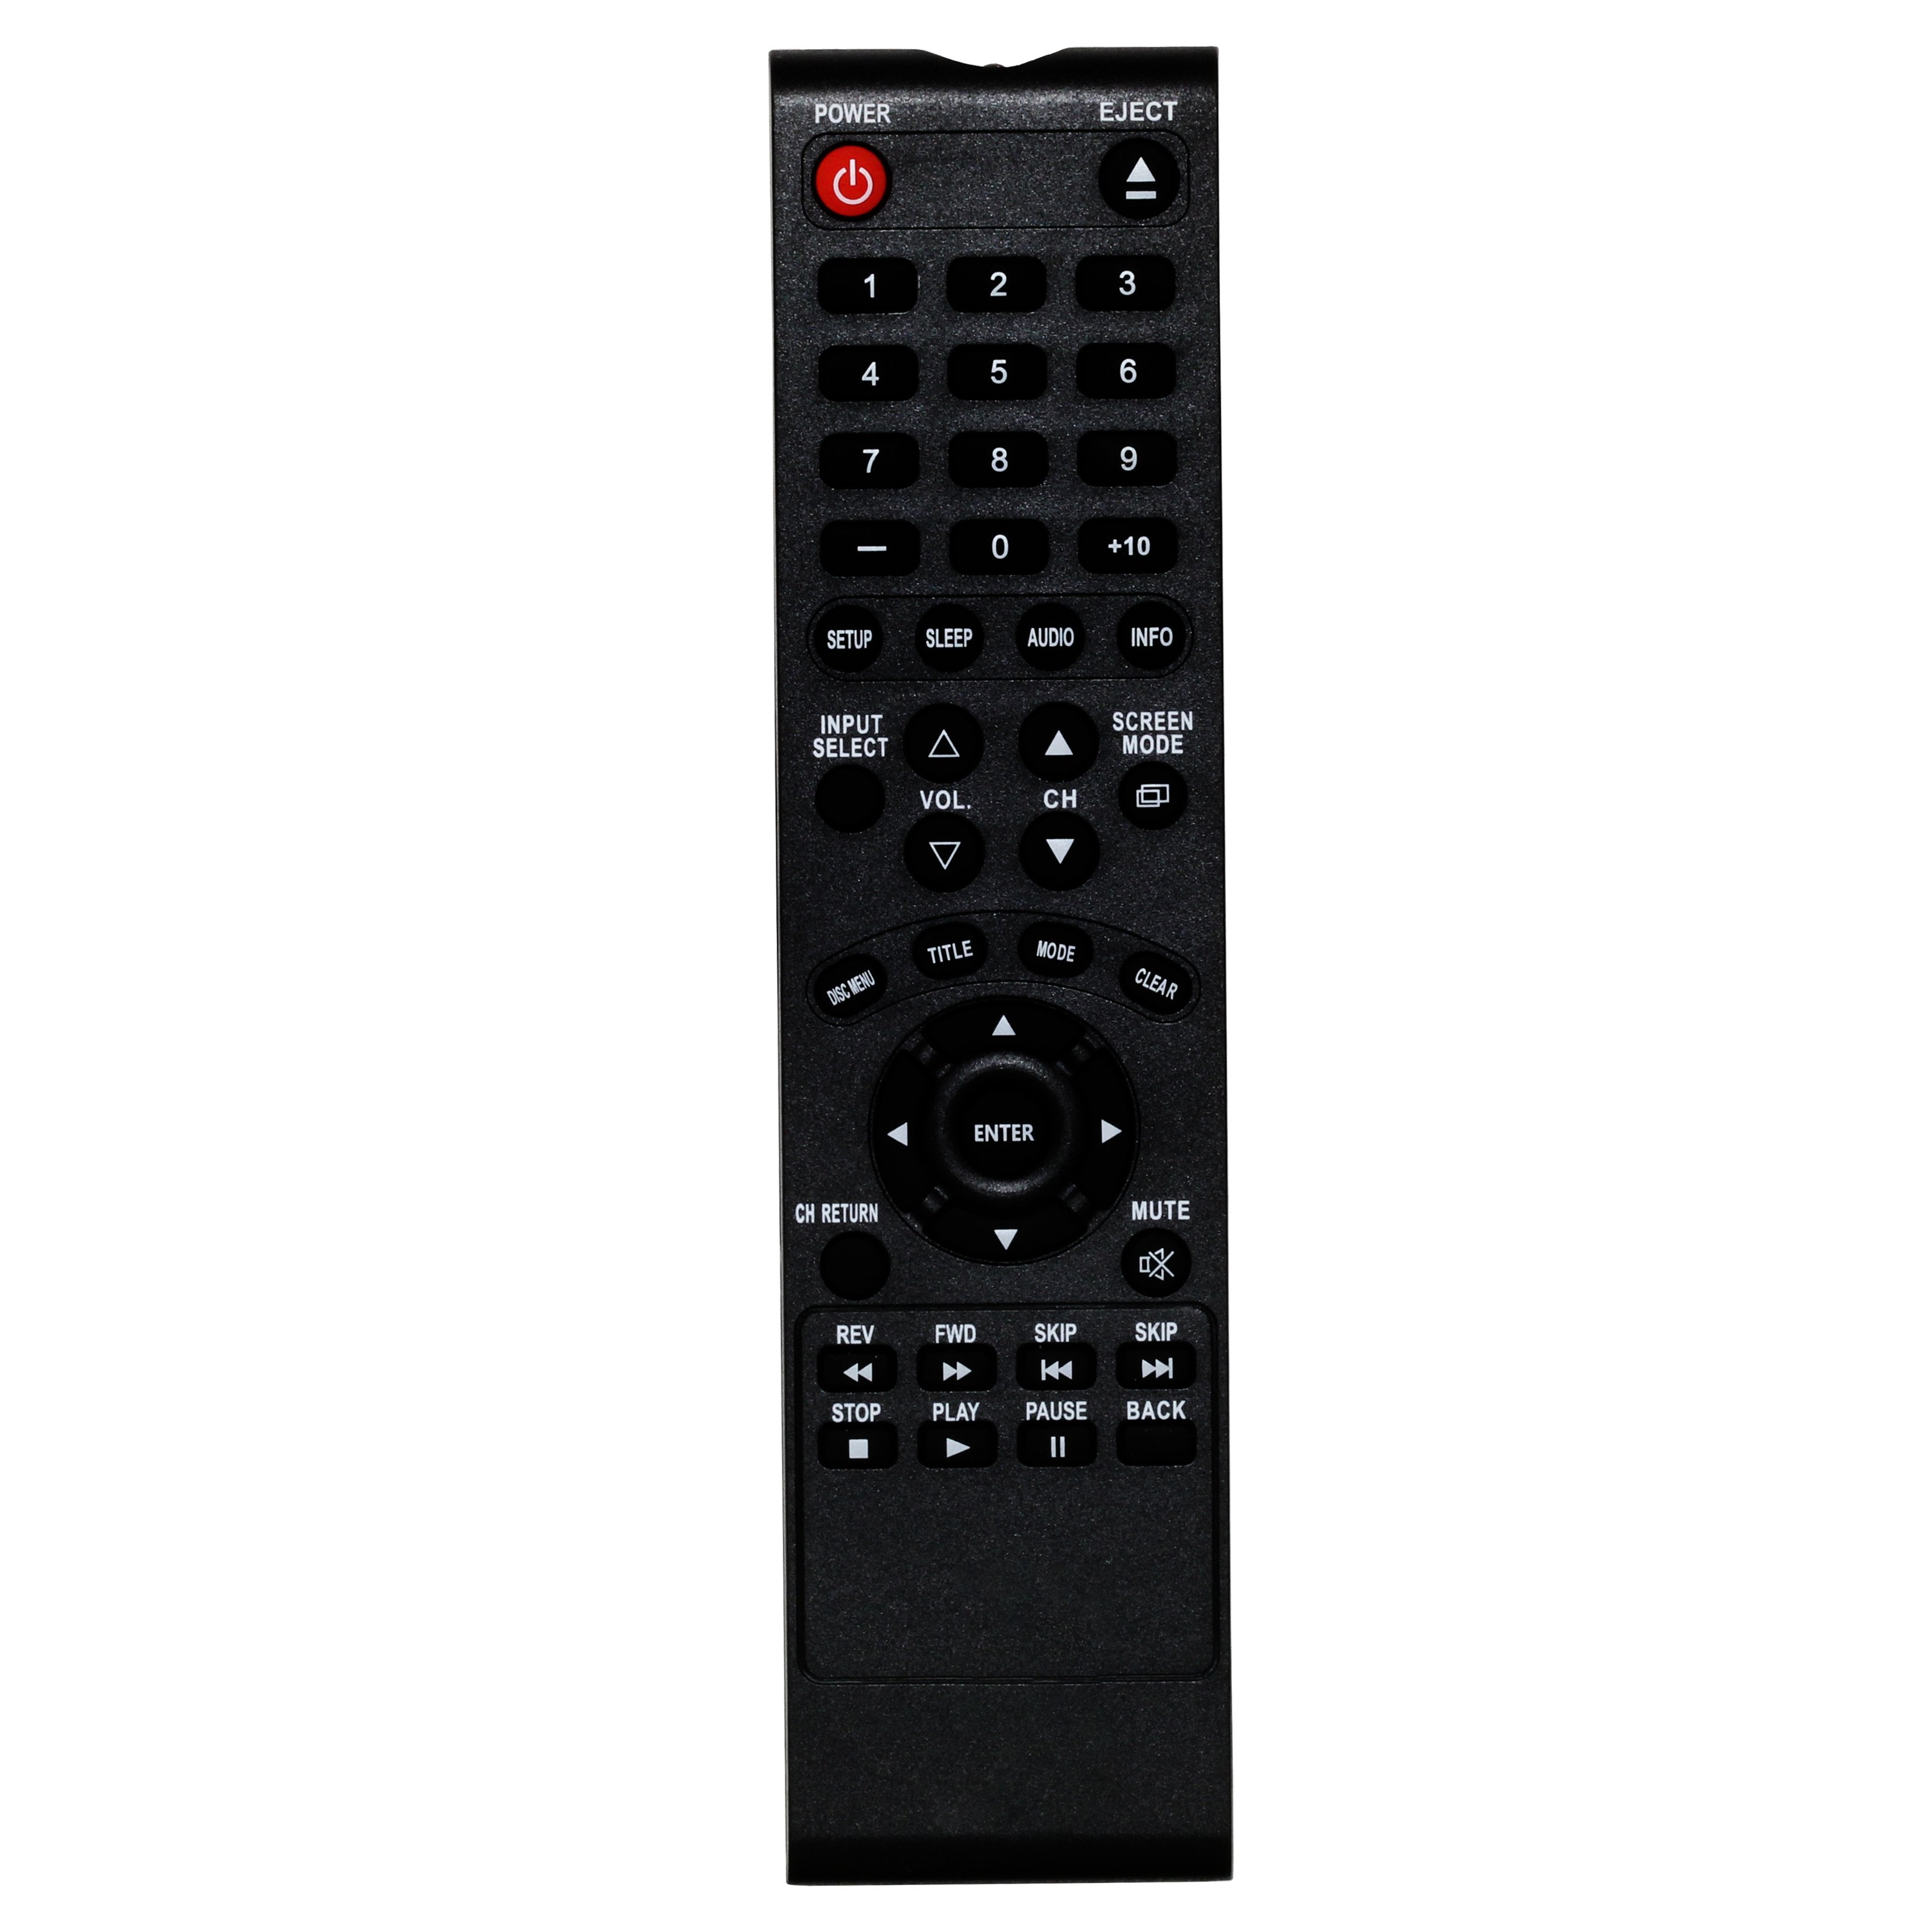 Sylvania RLF650PE02  TV Remote